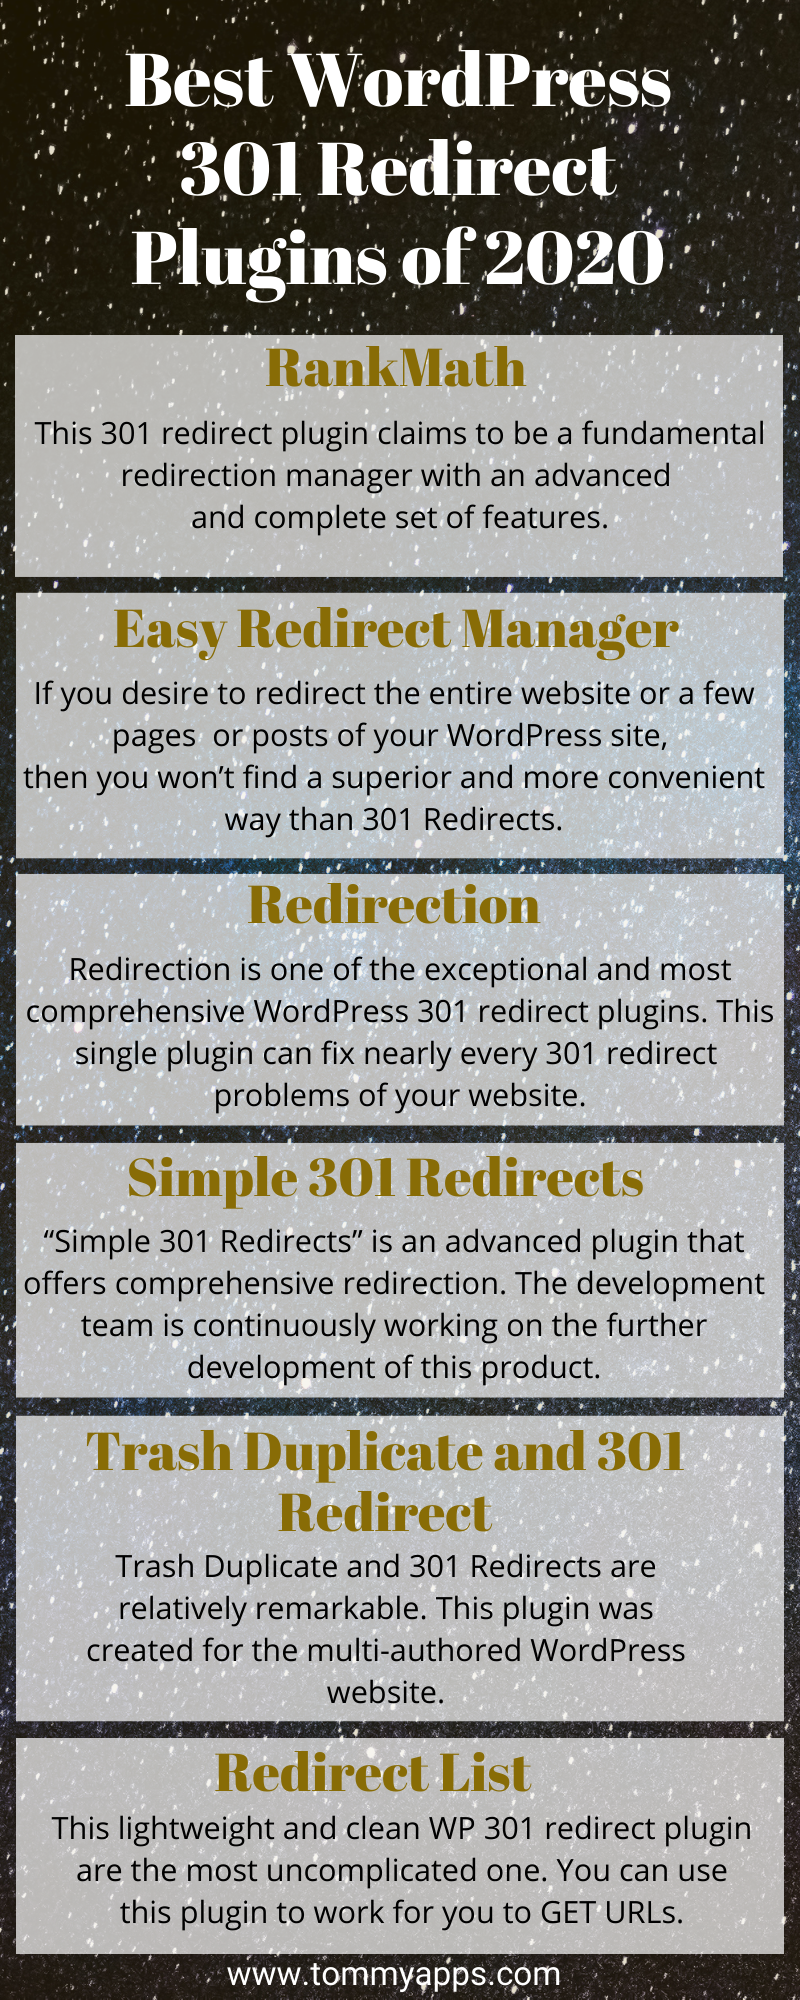 Best WordPress 301 Redirect Plugins of 2020